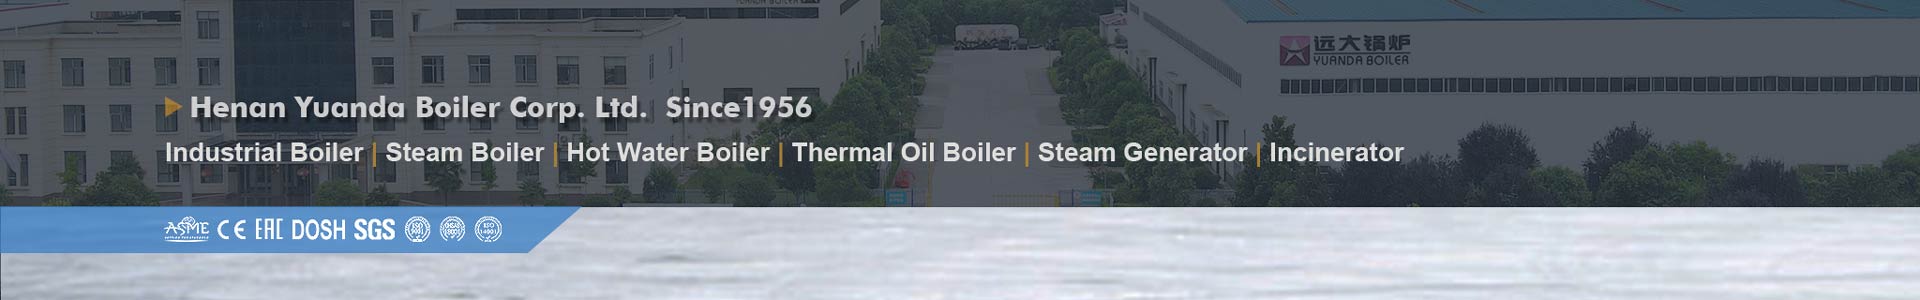 steam boiler,hot water boiler,thermal oil boiler,industrial boiler